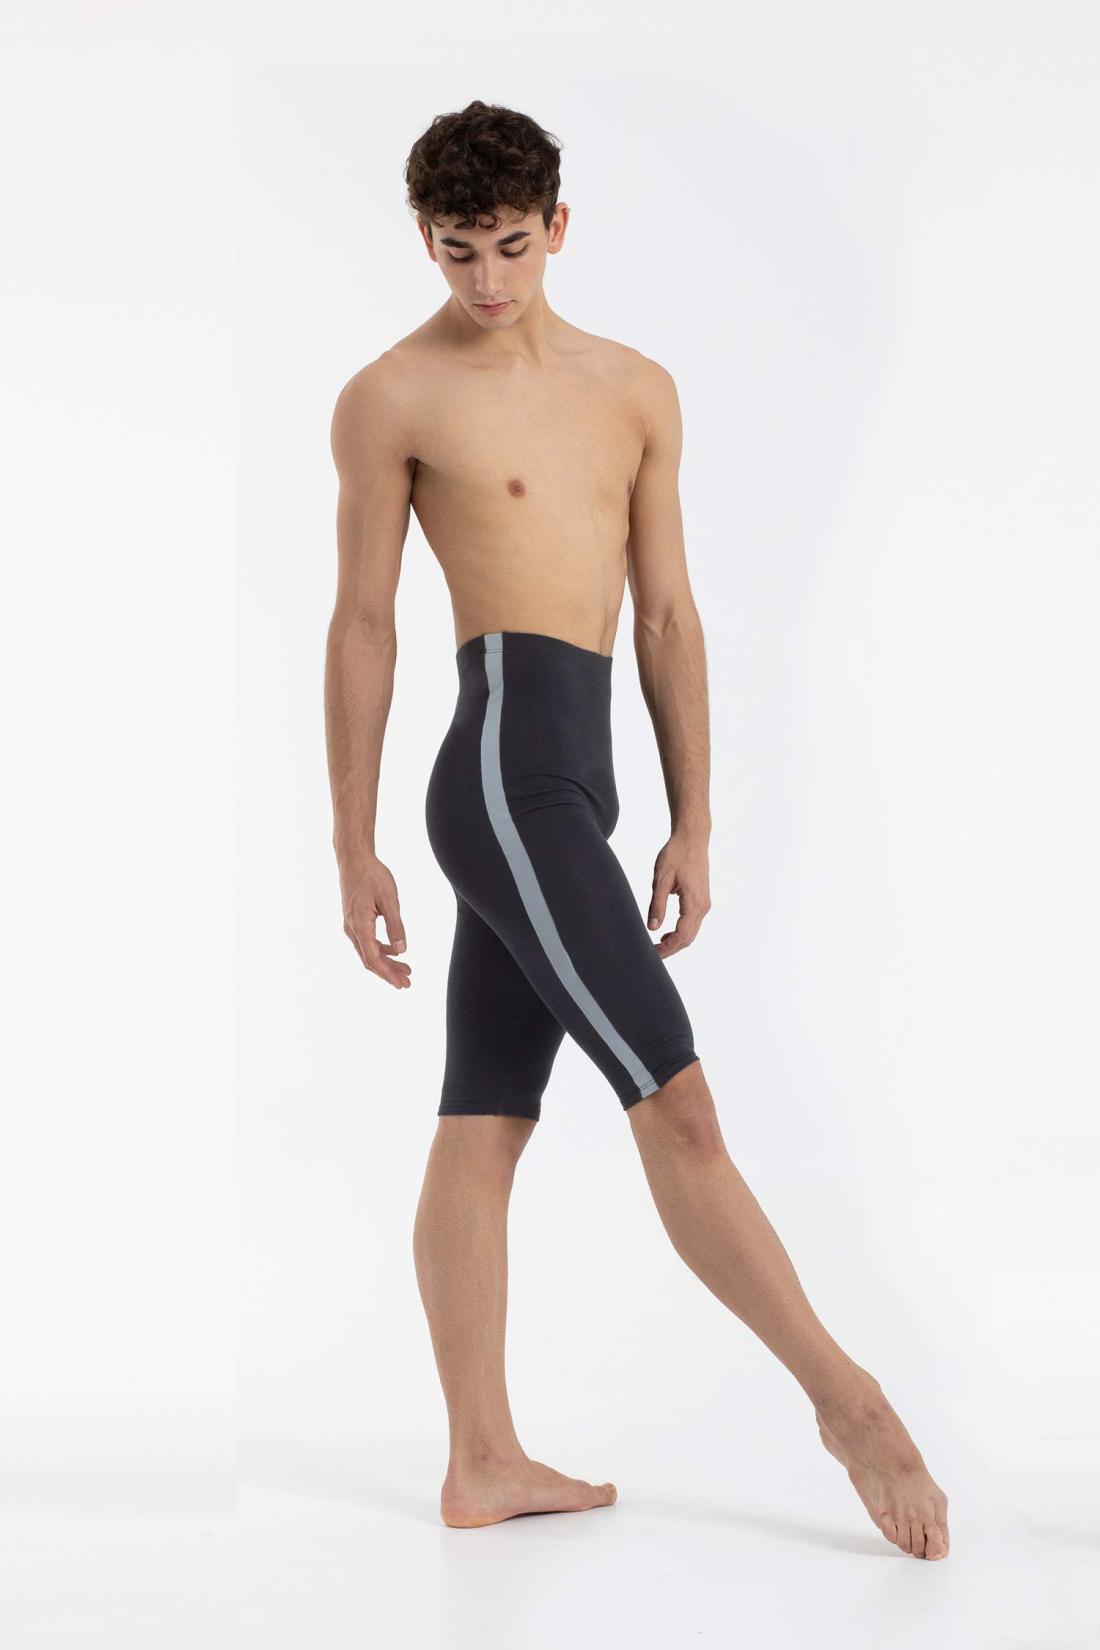 Short Pants with Stripe for Male Dancers | Intermezzo Dancewear Ballet